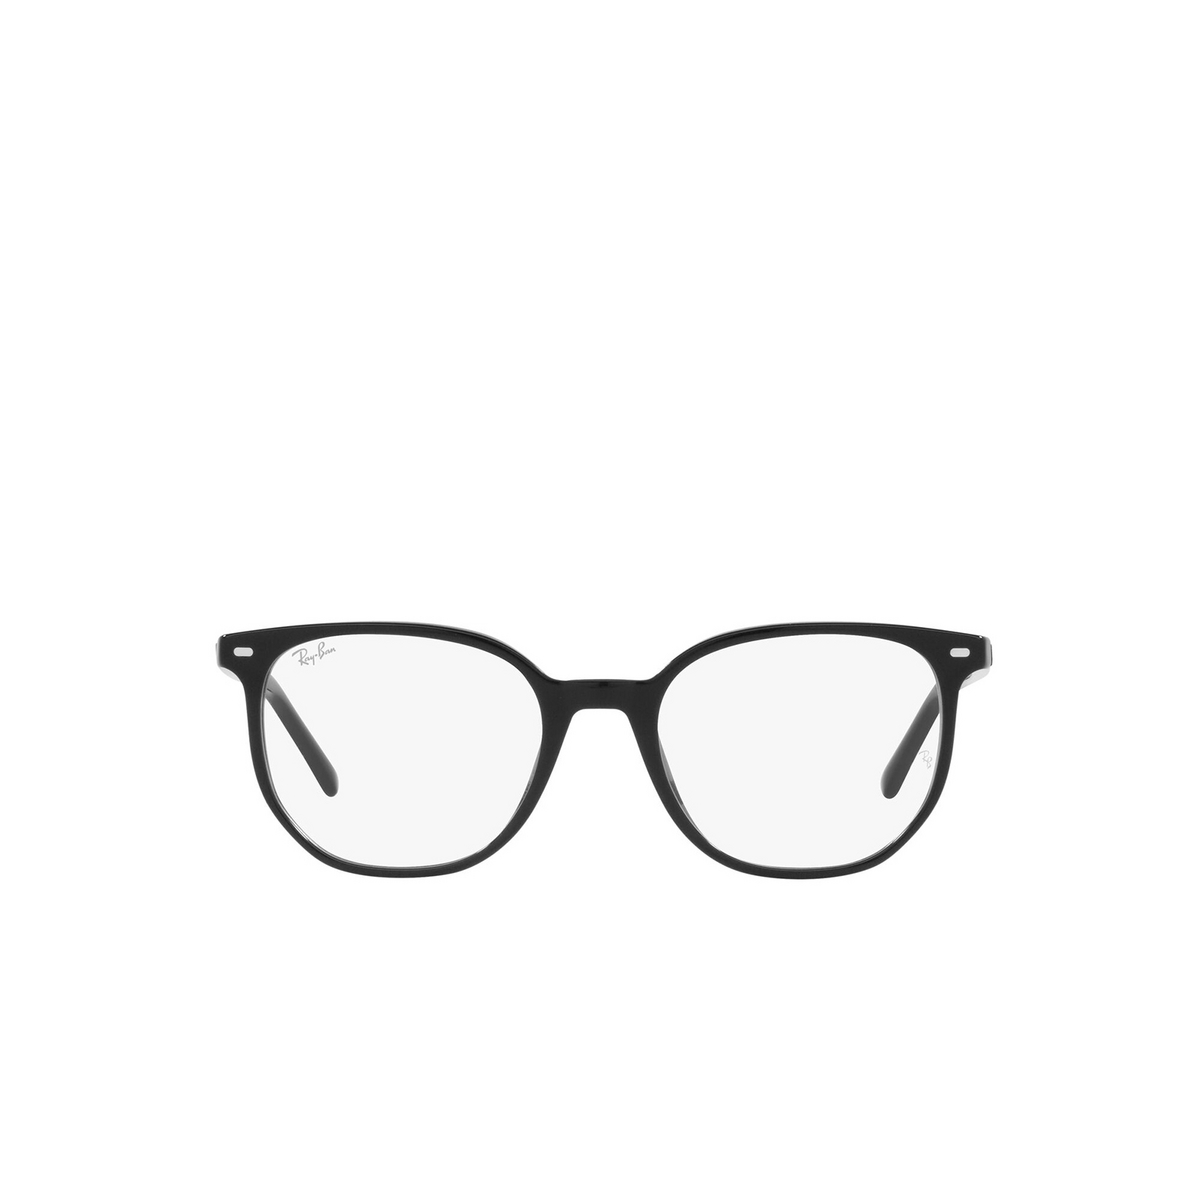 Ray-Ban ELLIOT Eyeglasses 2000 Black - front view